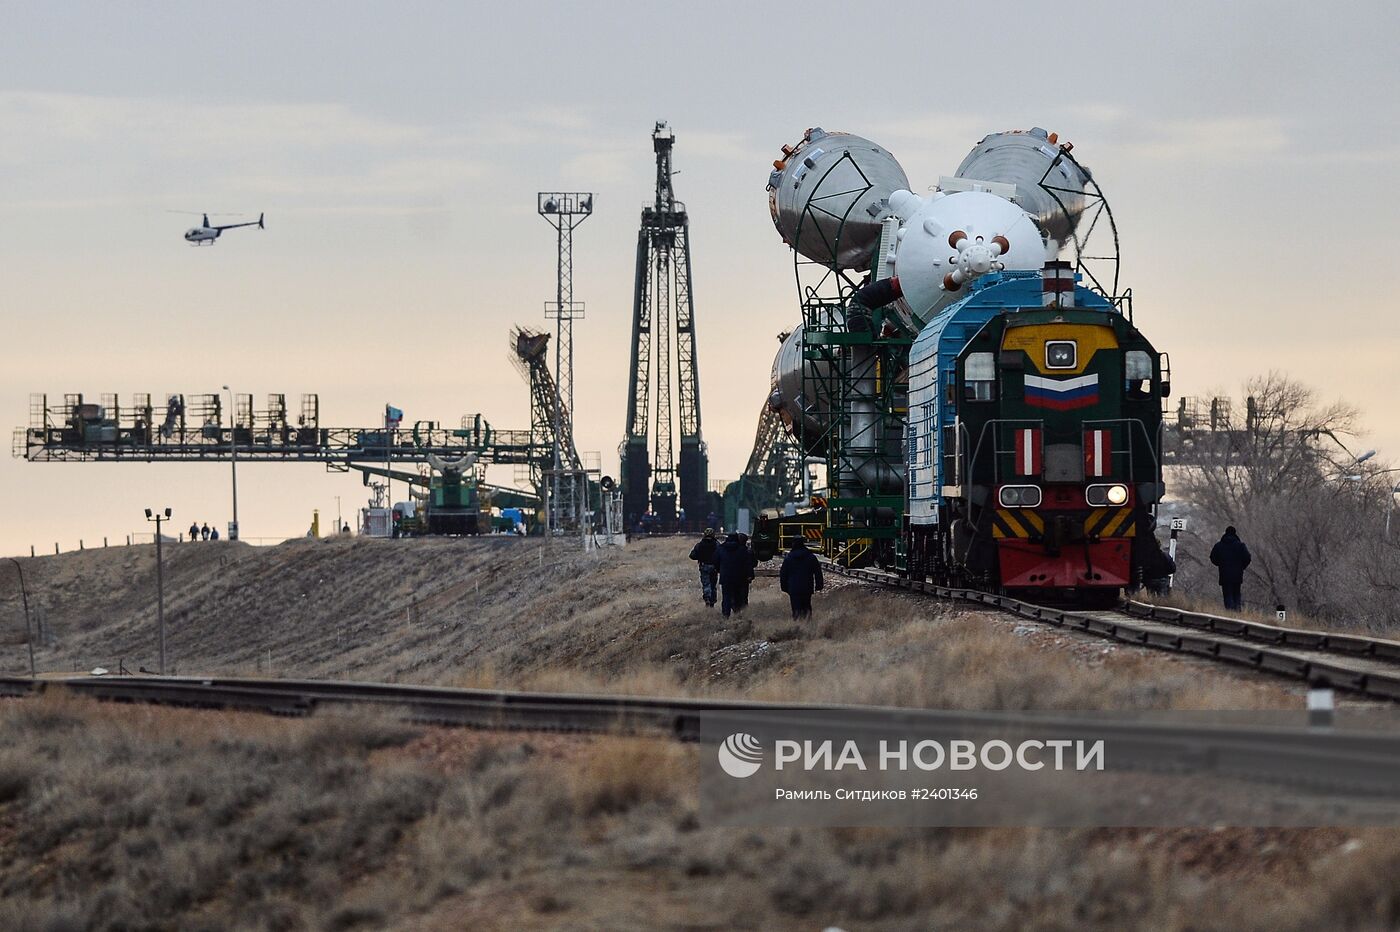 Вывоз и установка PH "Союз-ФГ" с ТПК "Союз ТМА-12М" на космодроме "Байконур"